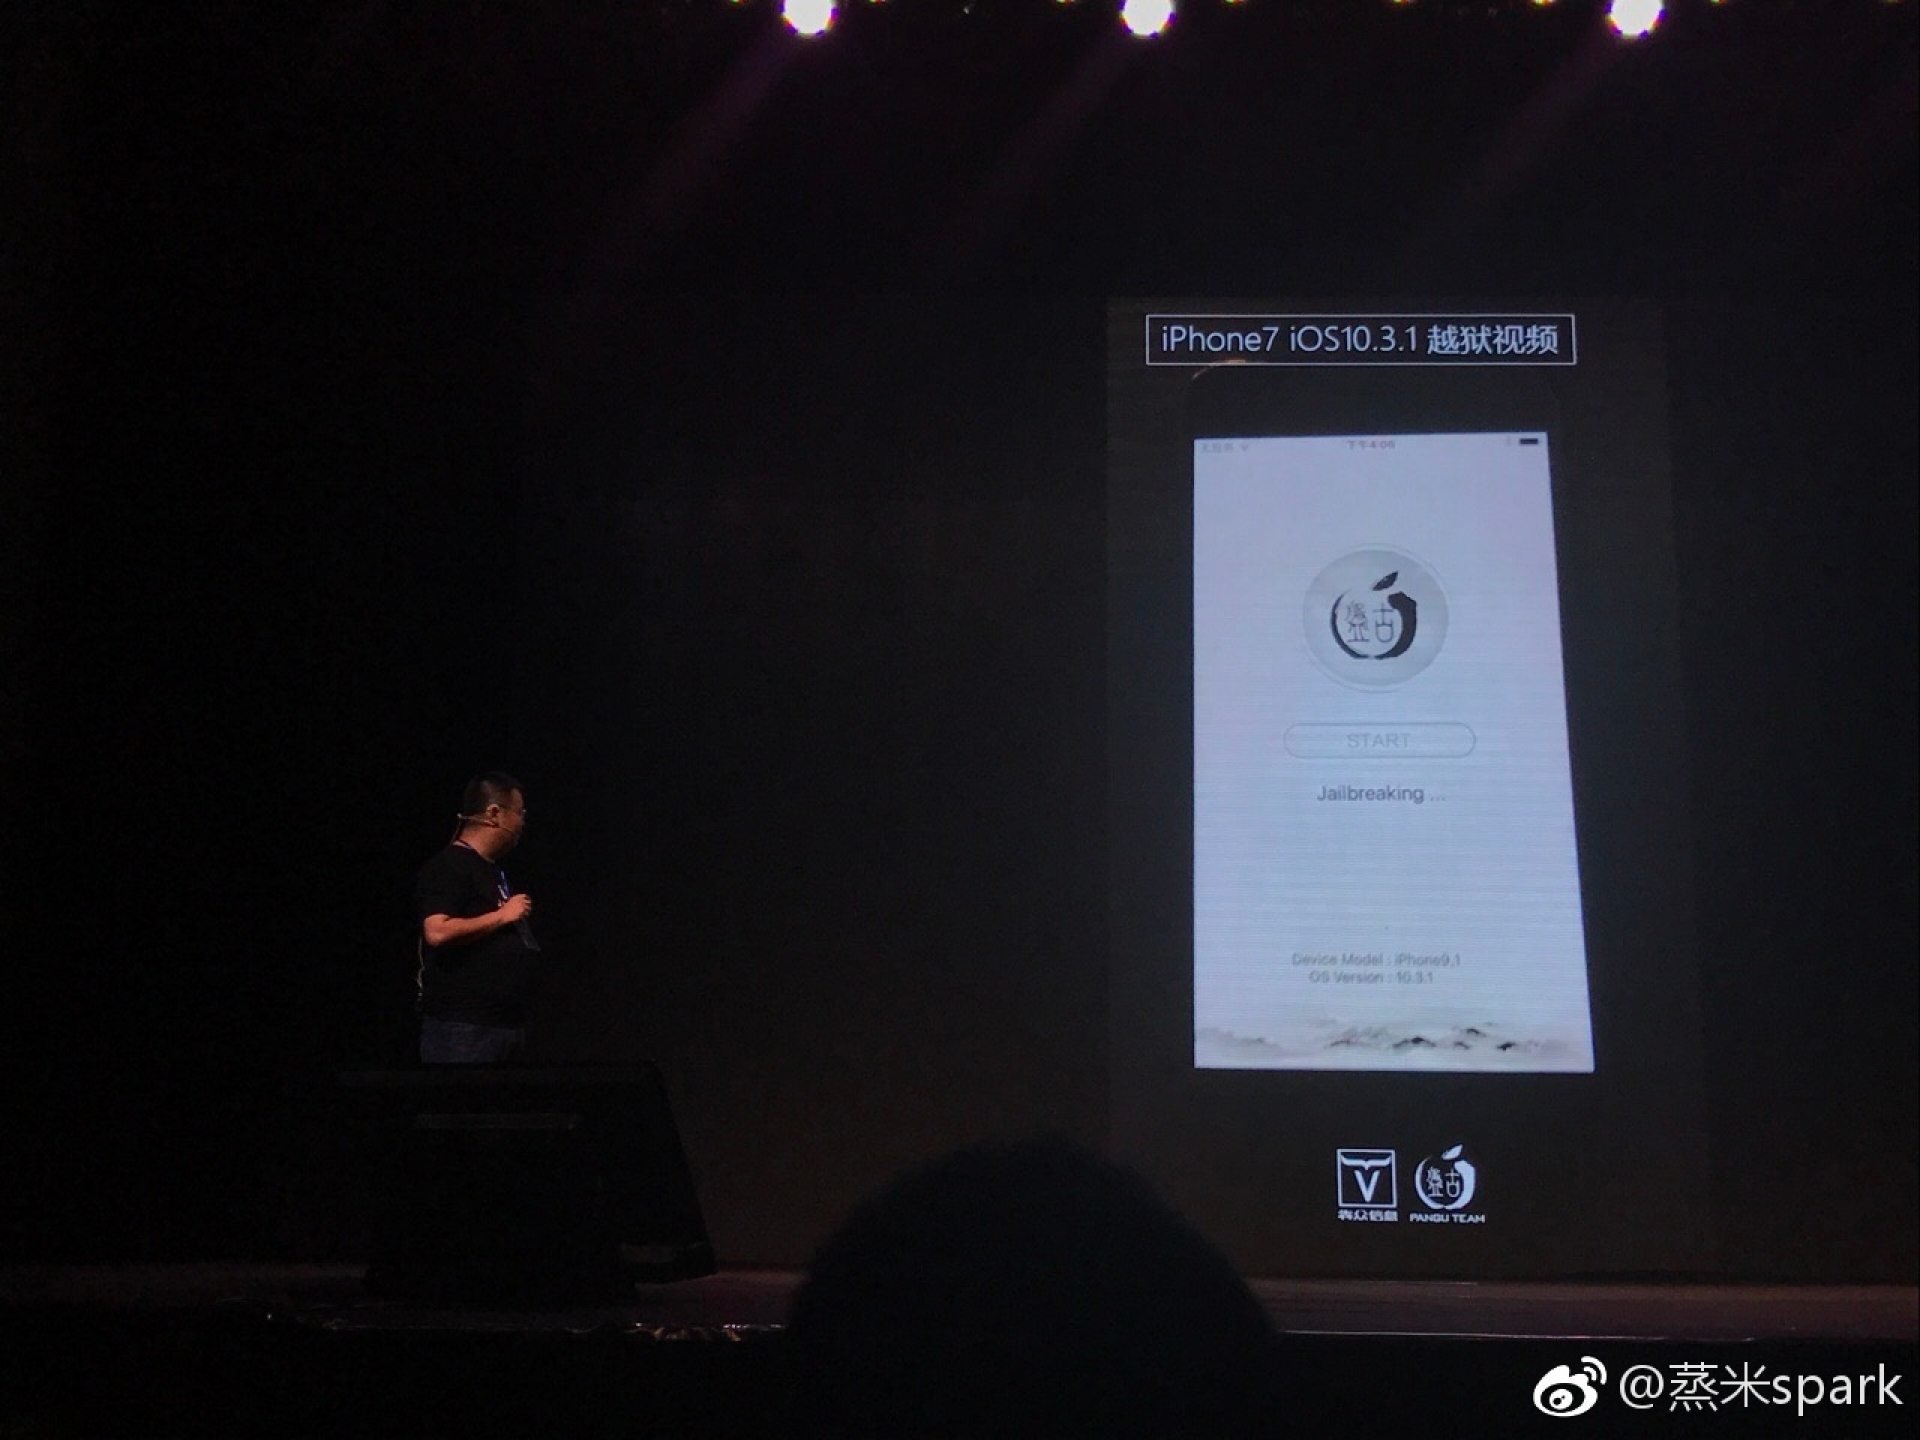 iPhone 7: Εμφανίστηκε Jailbreak σε iOS 10.3.1 1